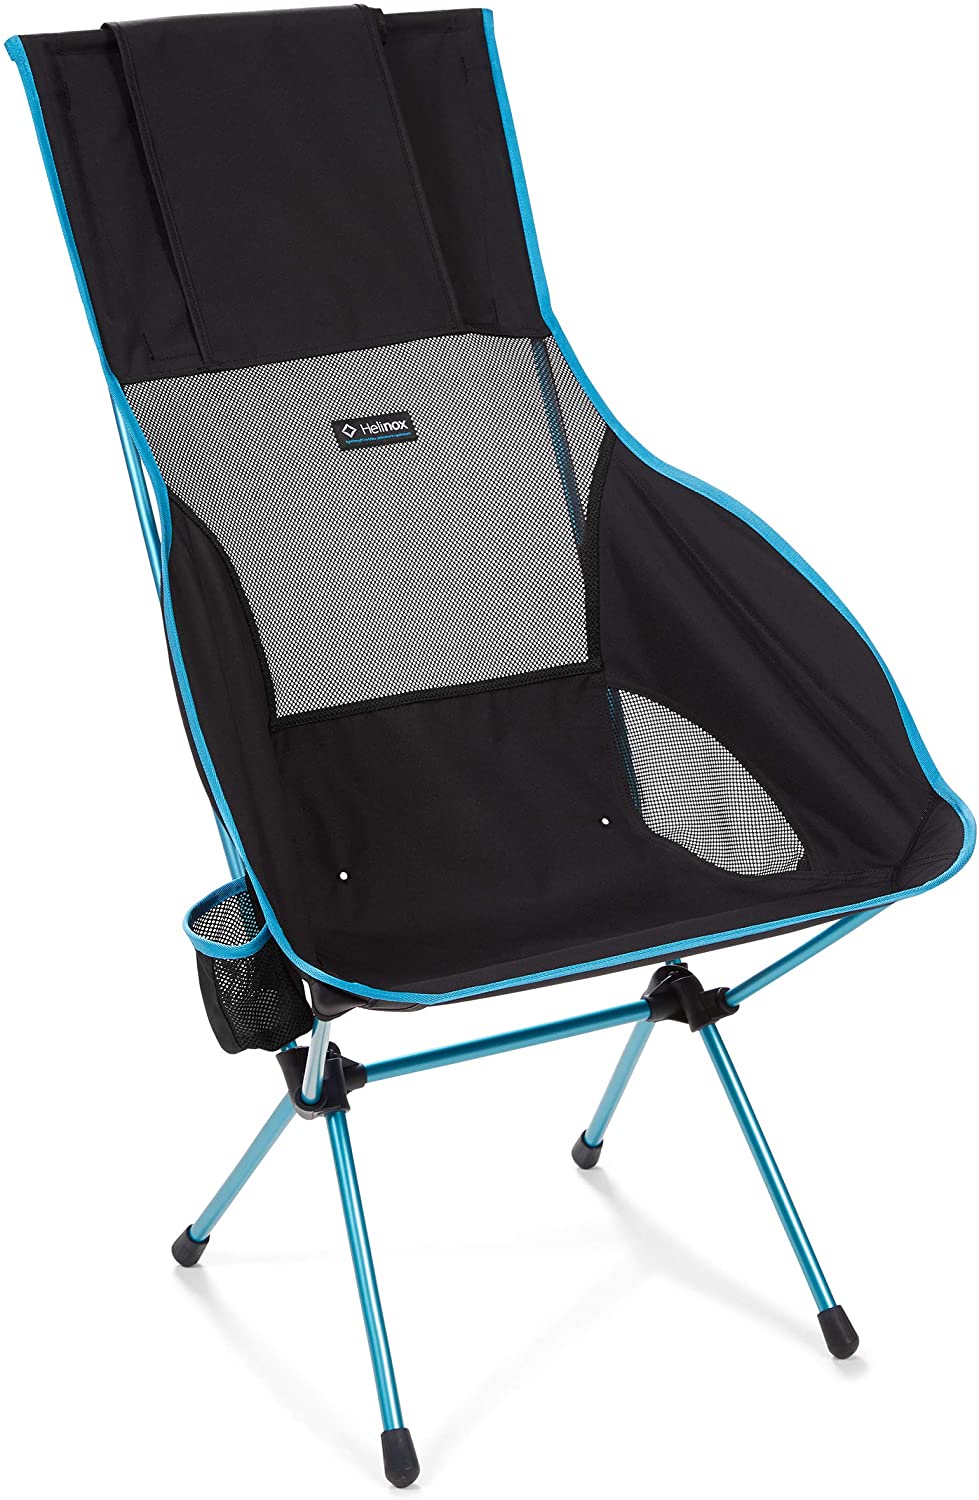 Helinox Savanna Chair - Camping chair